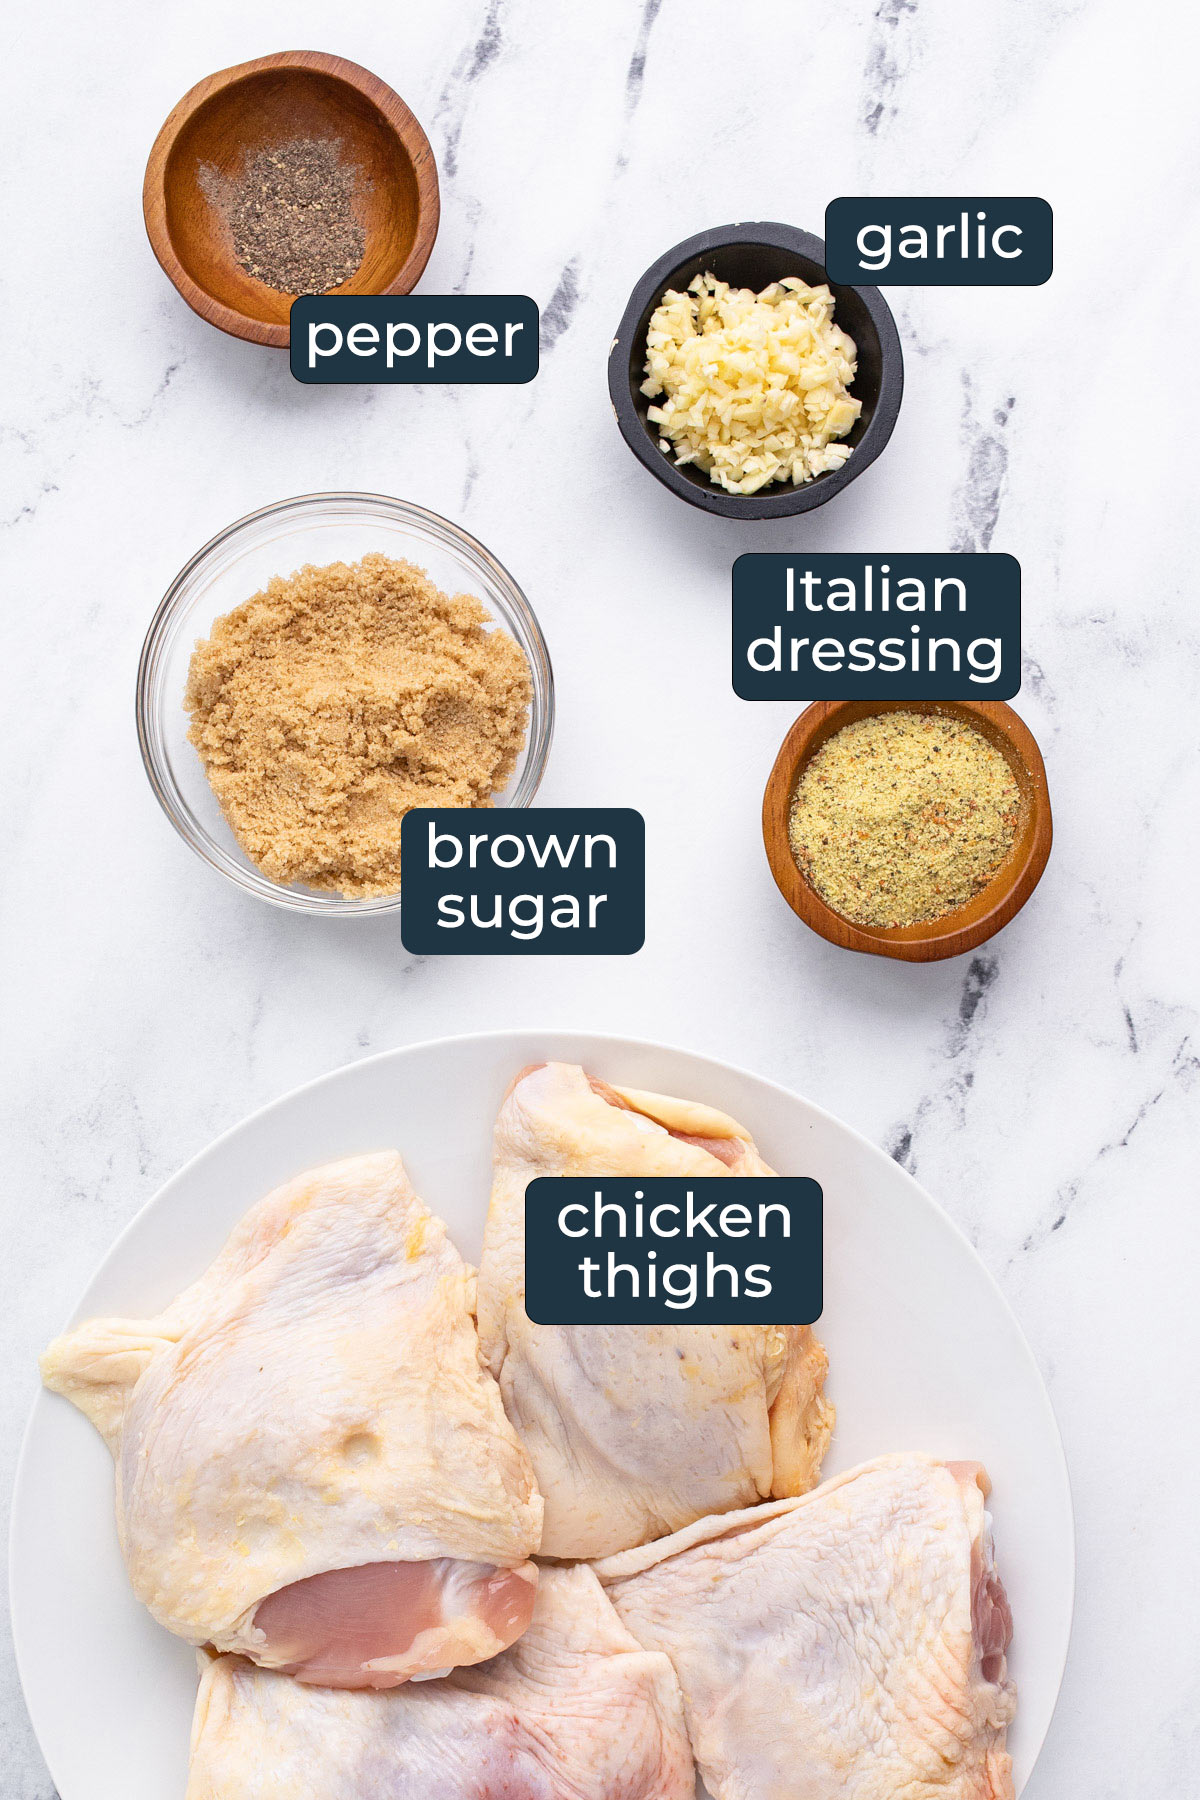 Ingredients to make slow cooker brown sugar garlic chicken in prep bowls.